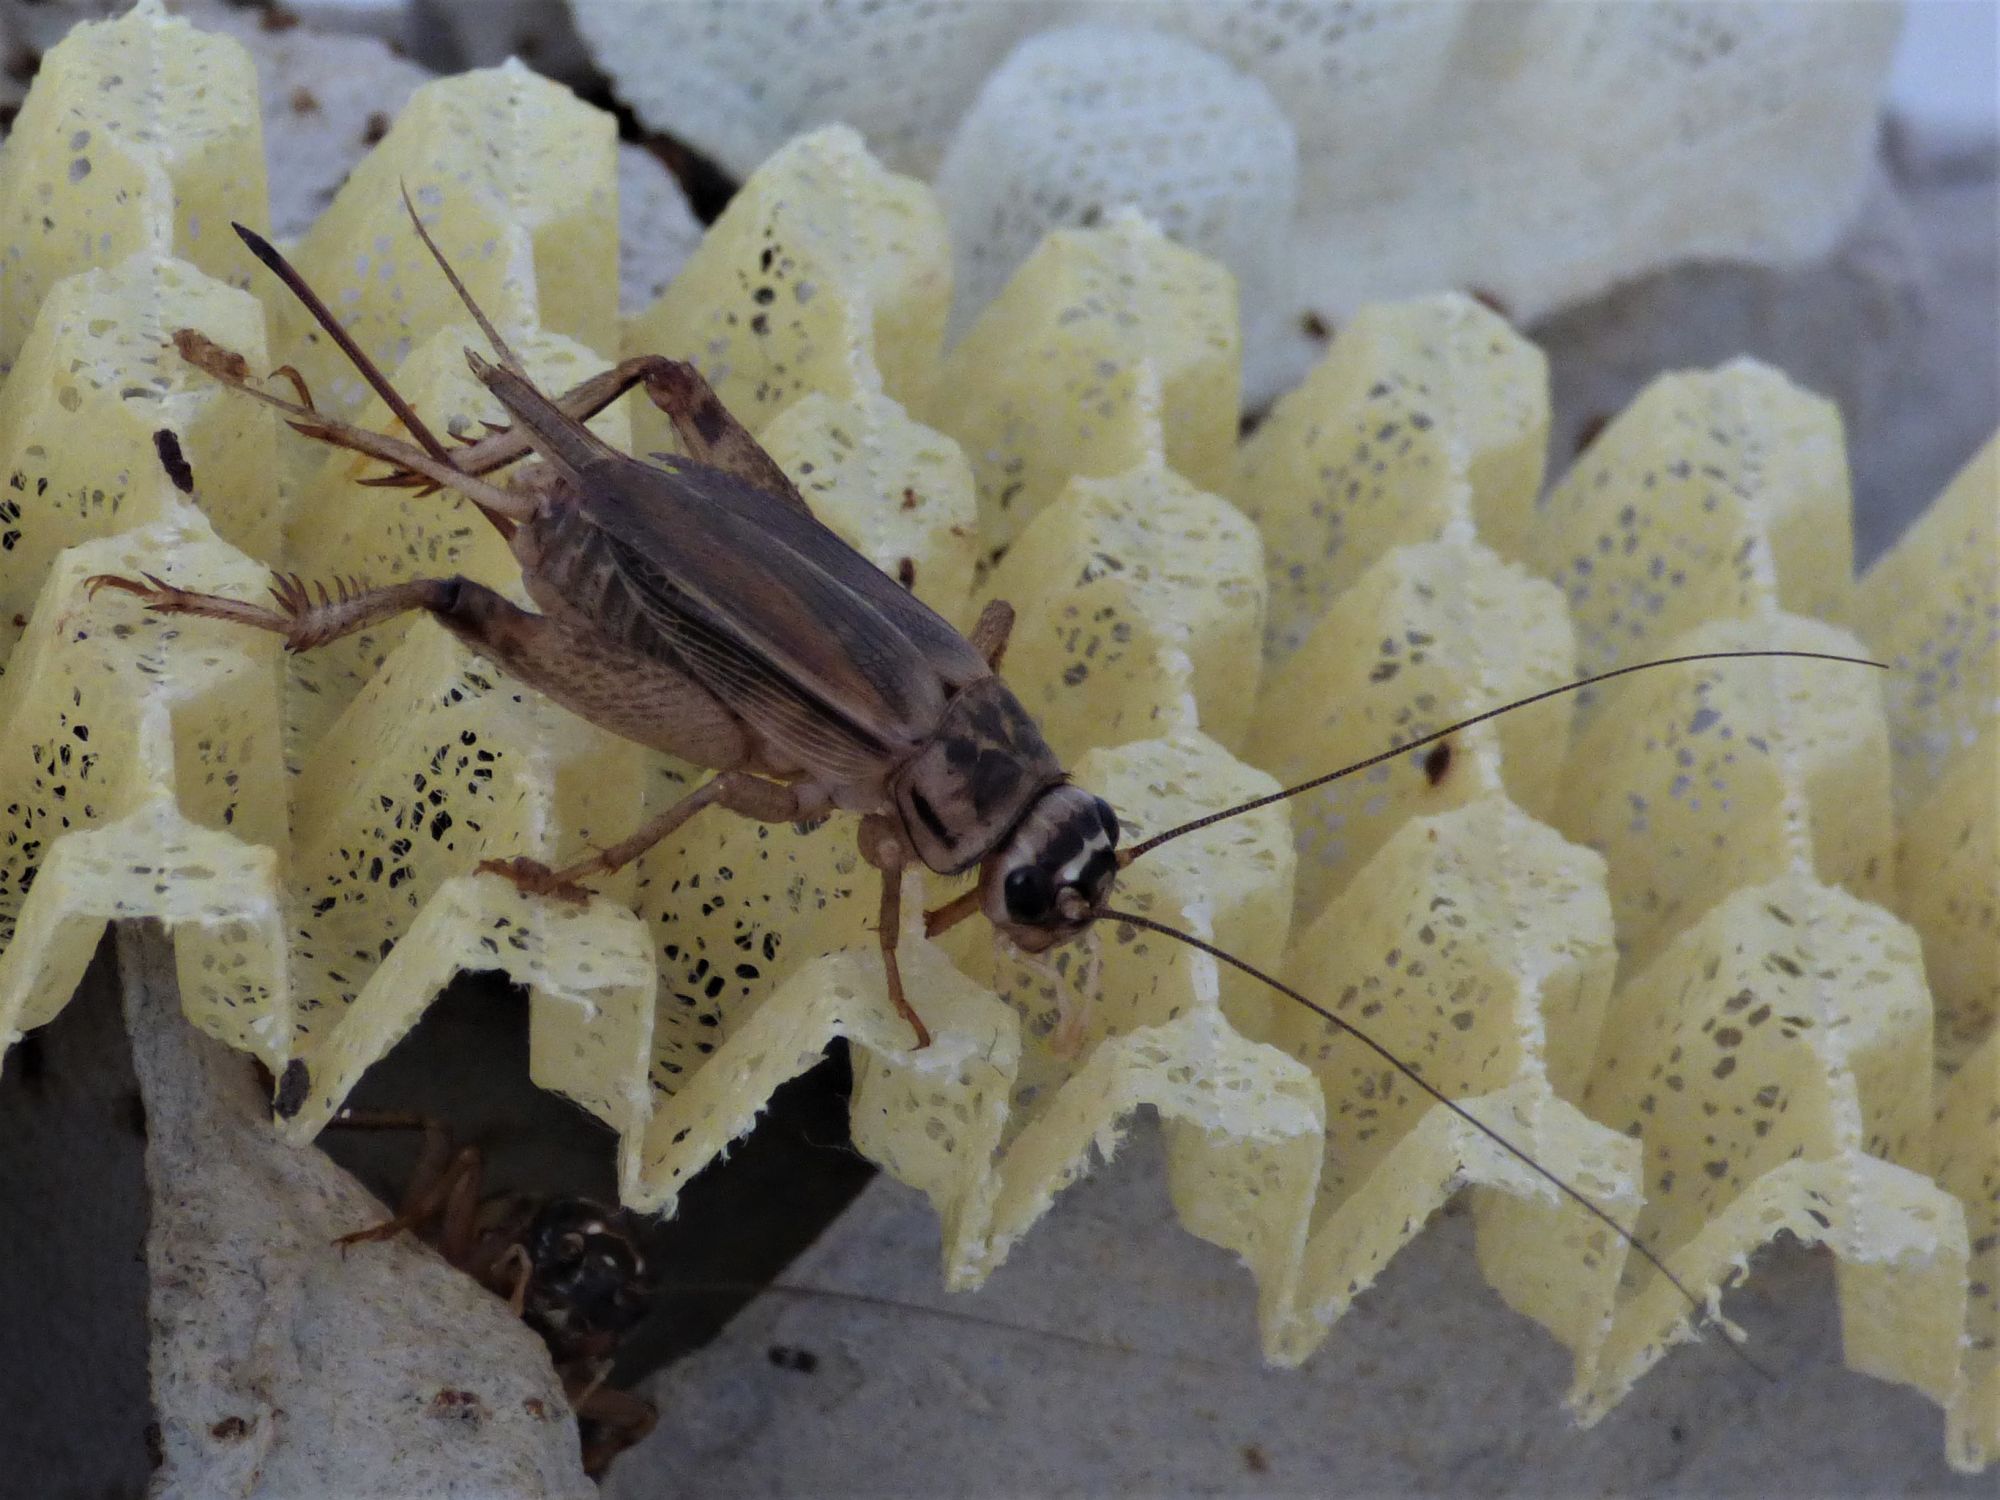 Adult crickets (Acheta domesticus) explore the innovative lightweight materials of InnoMat GmbH